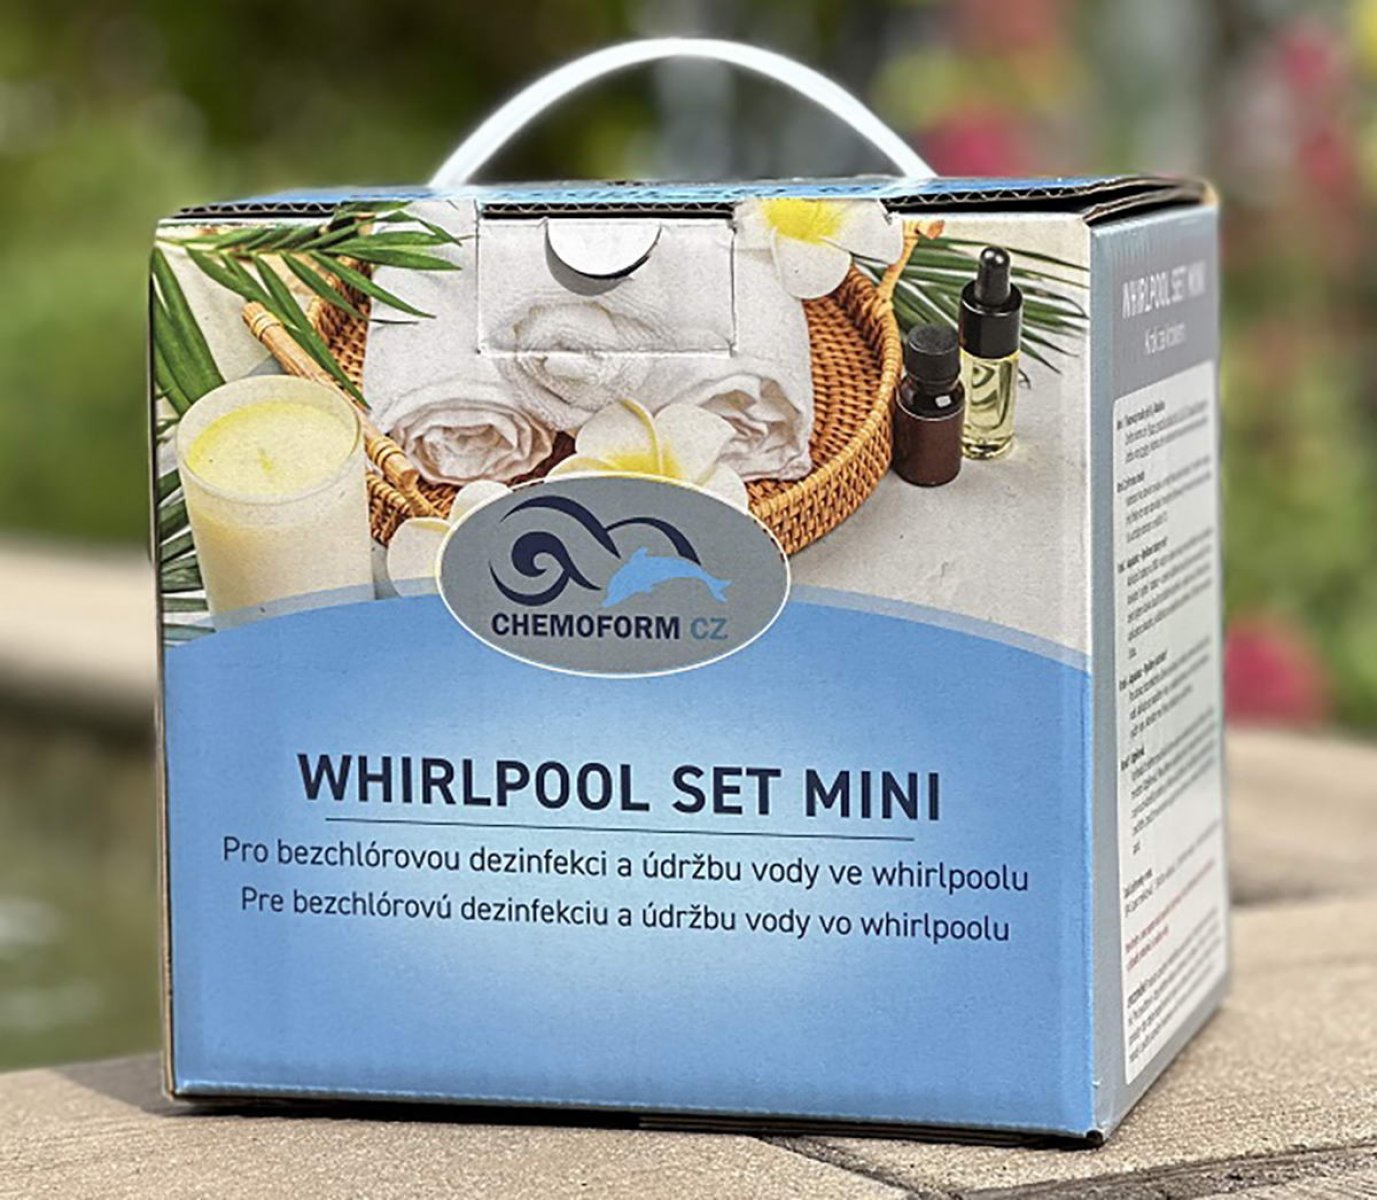 Whirlpool set mini - rohringer